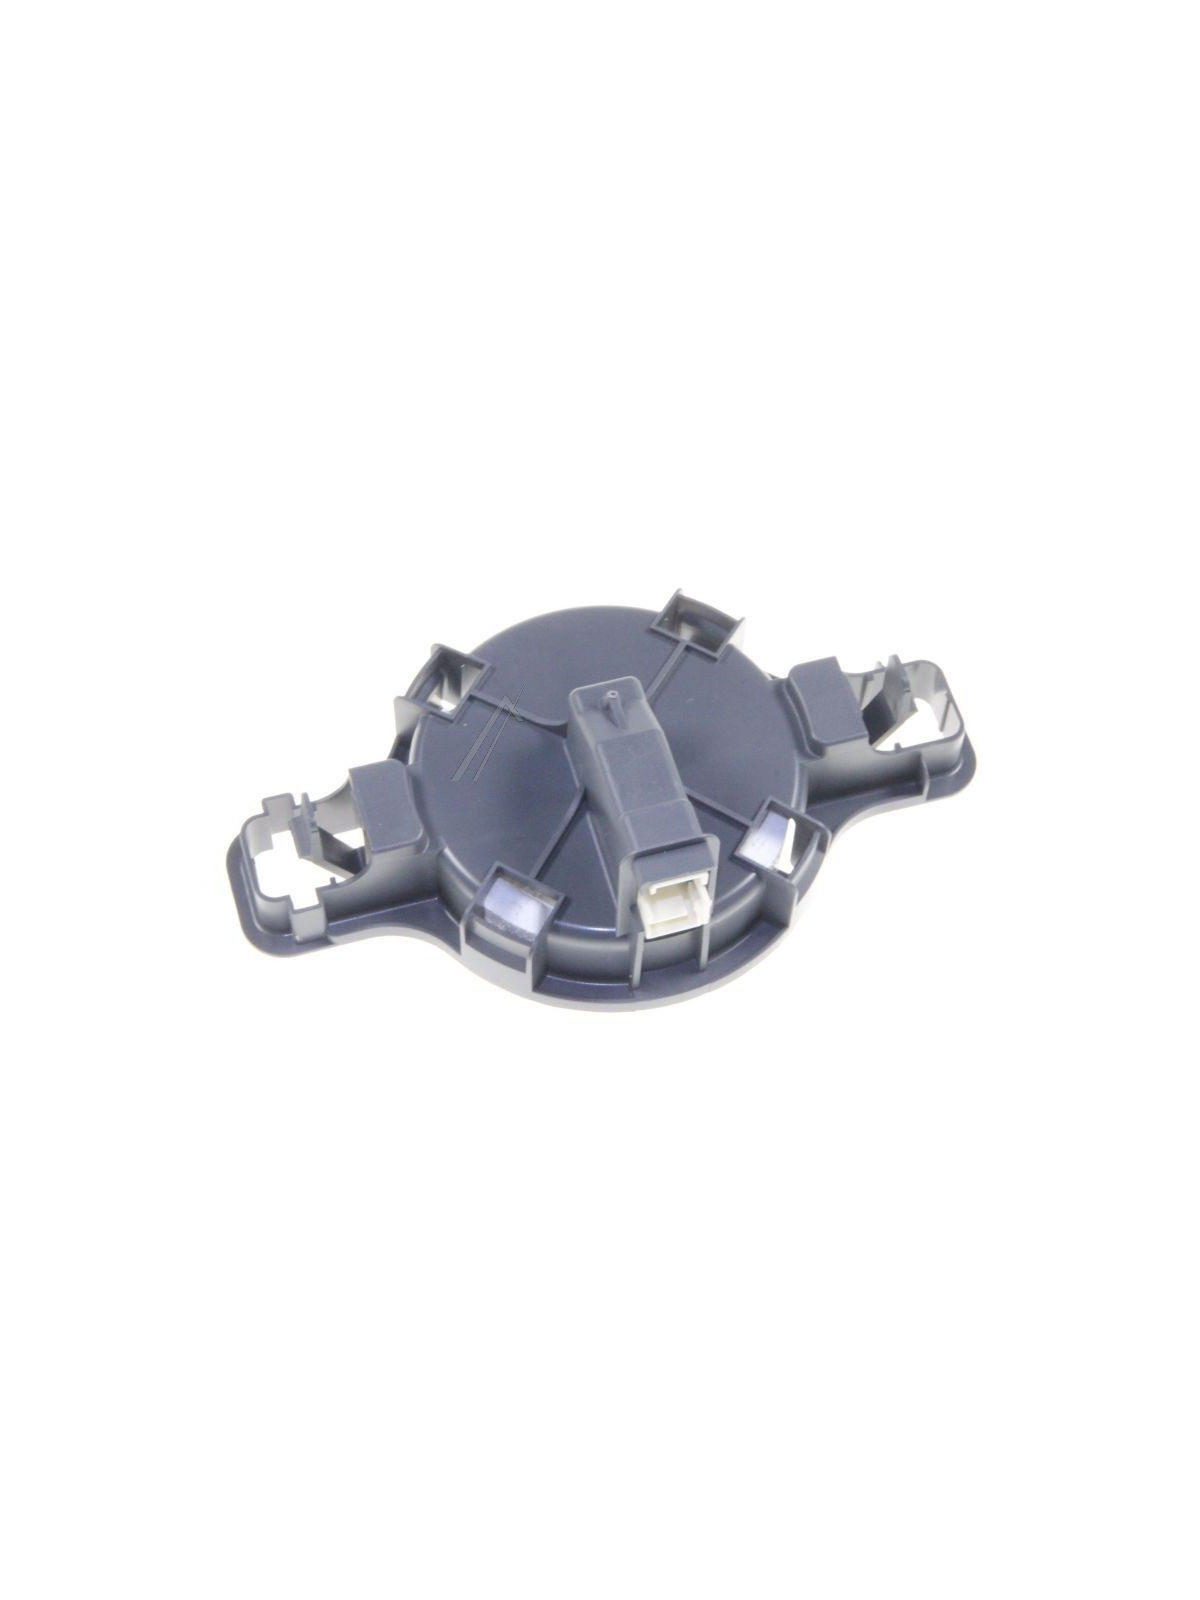 Dispositif anti-débordement Whirlpool WBC3C26PX - Lave vaisselle